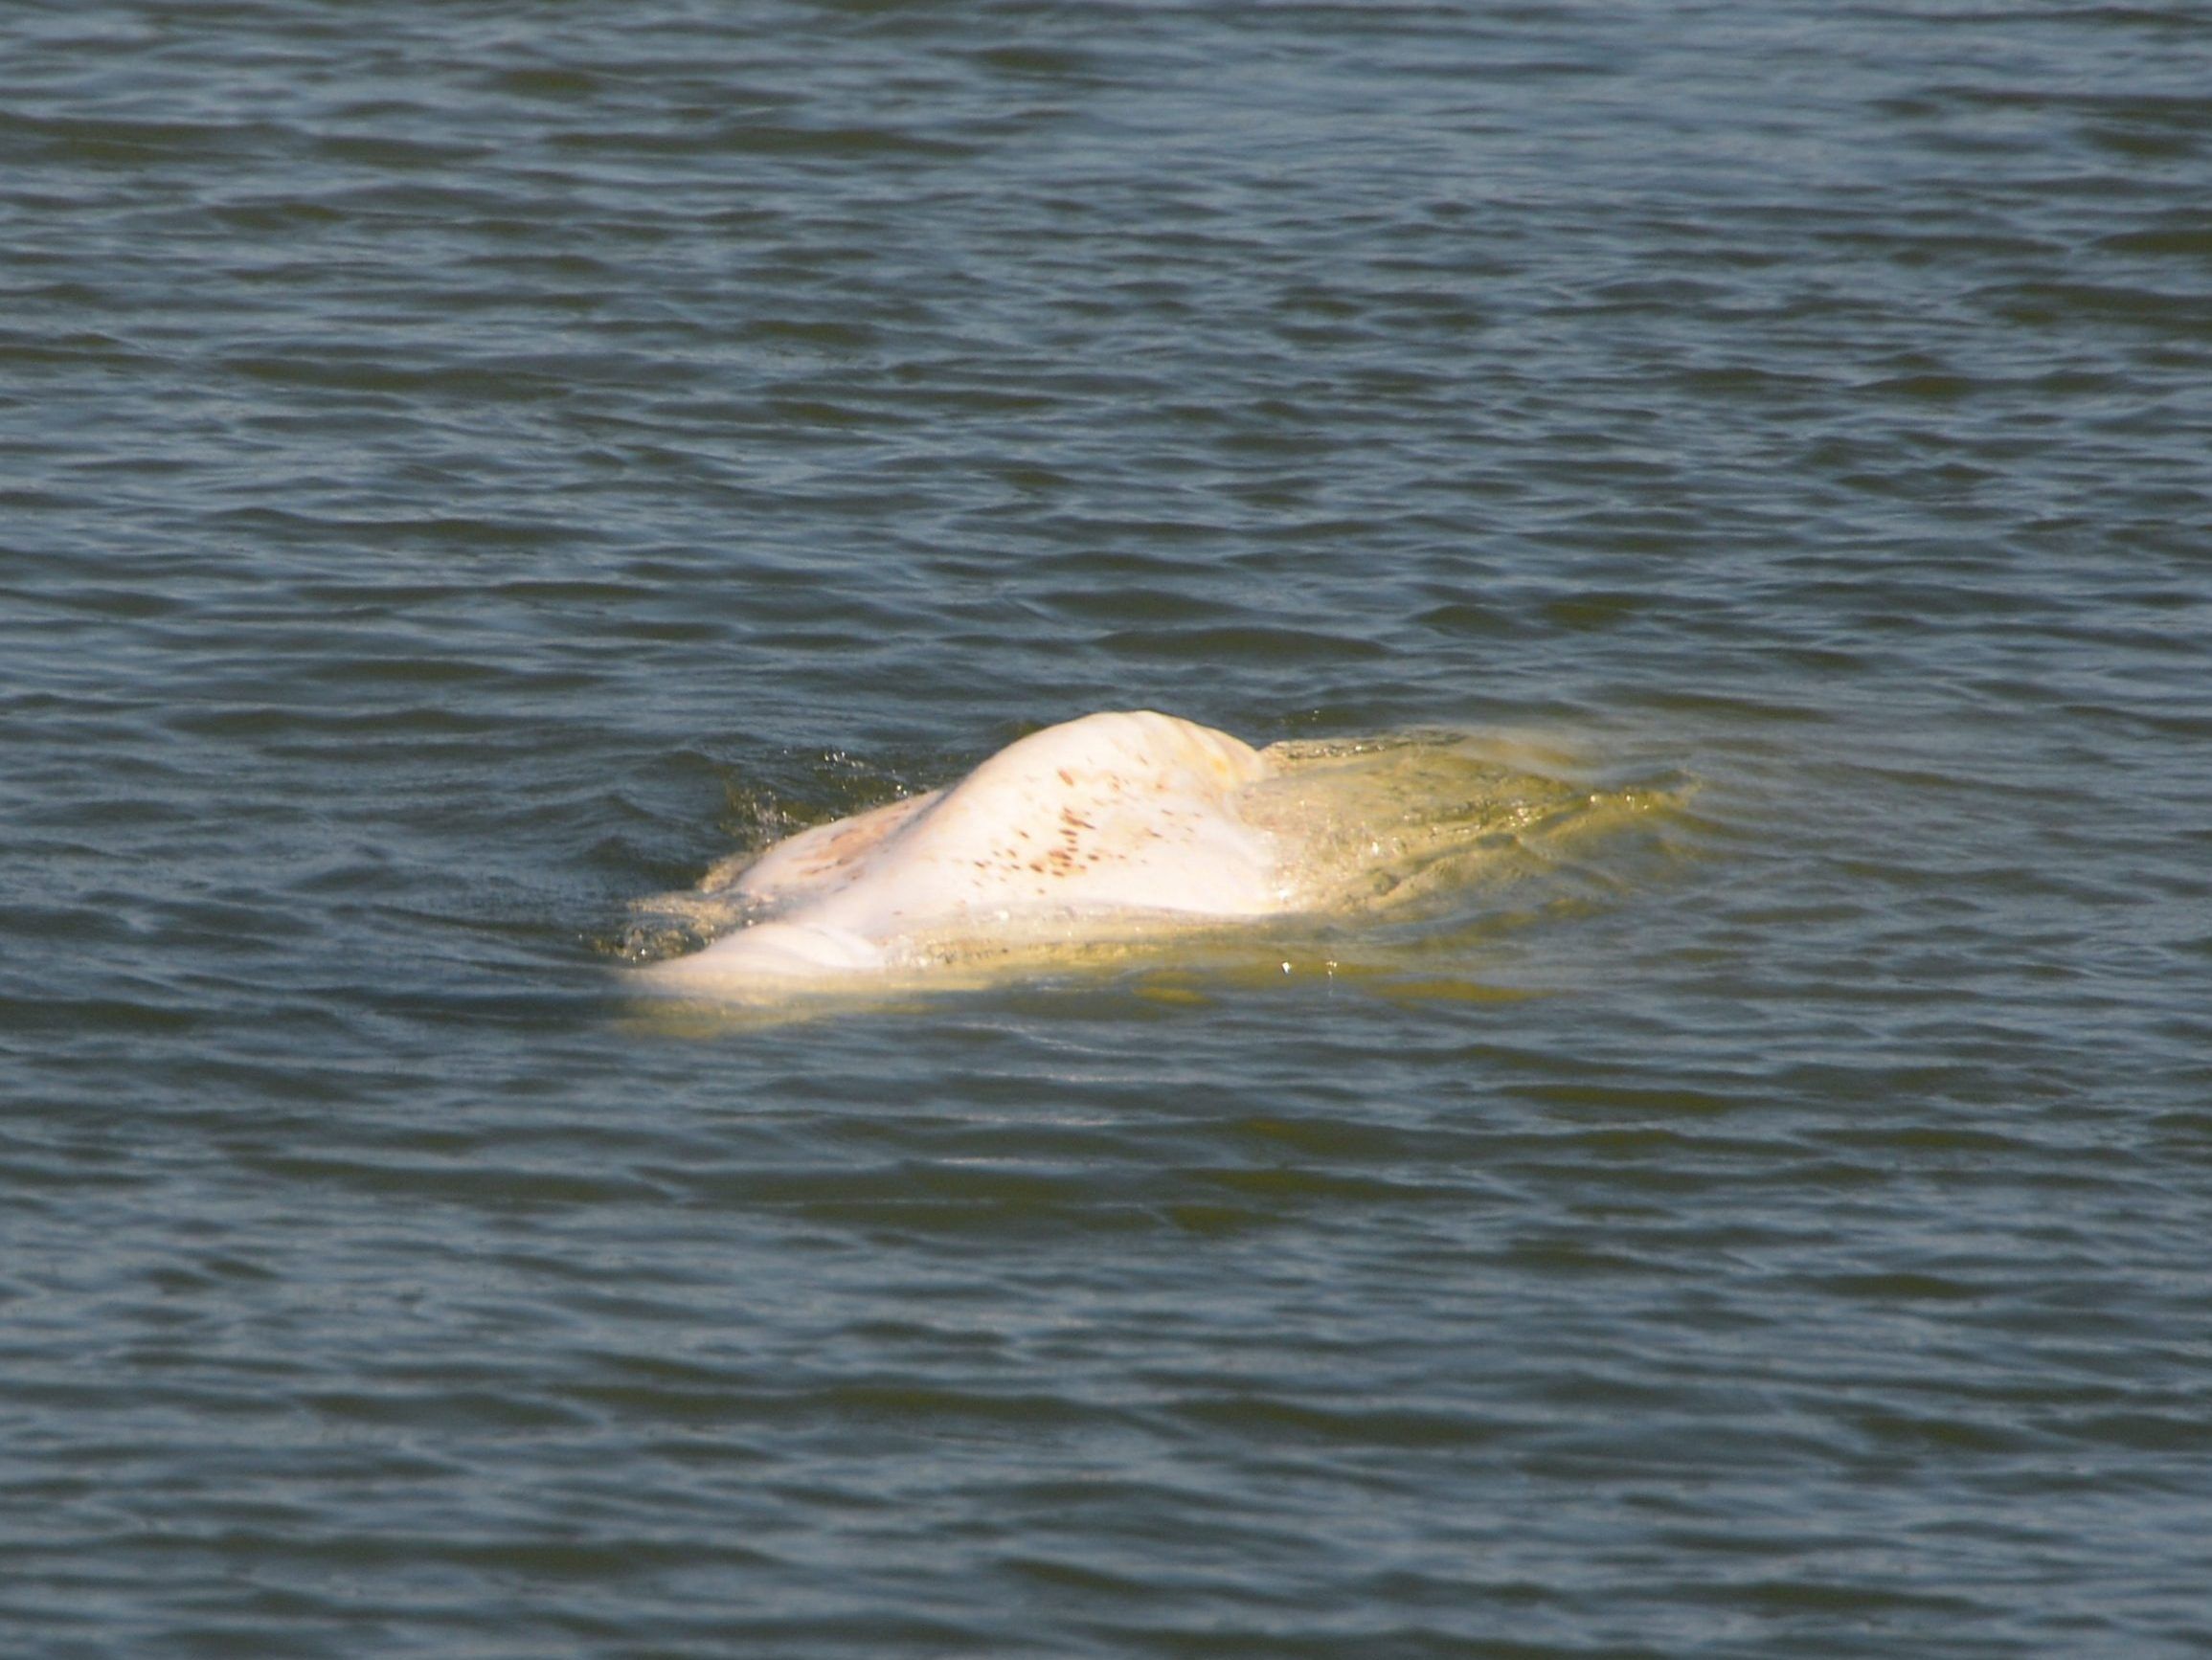 Efforts to feed Beluga whale in France's Seine fail so far